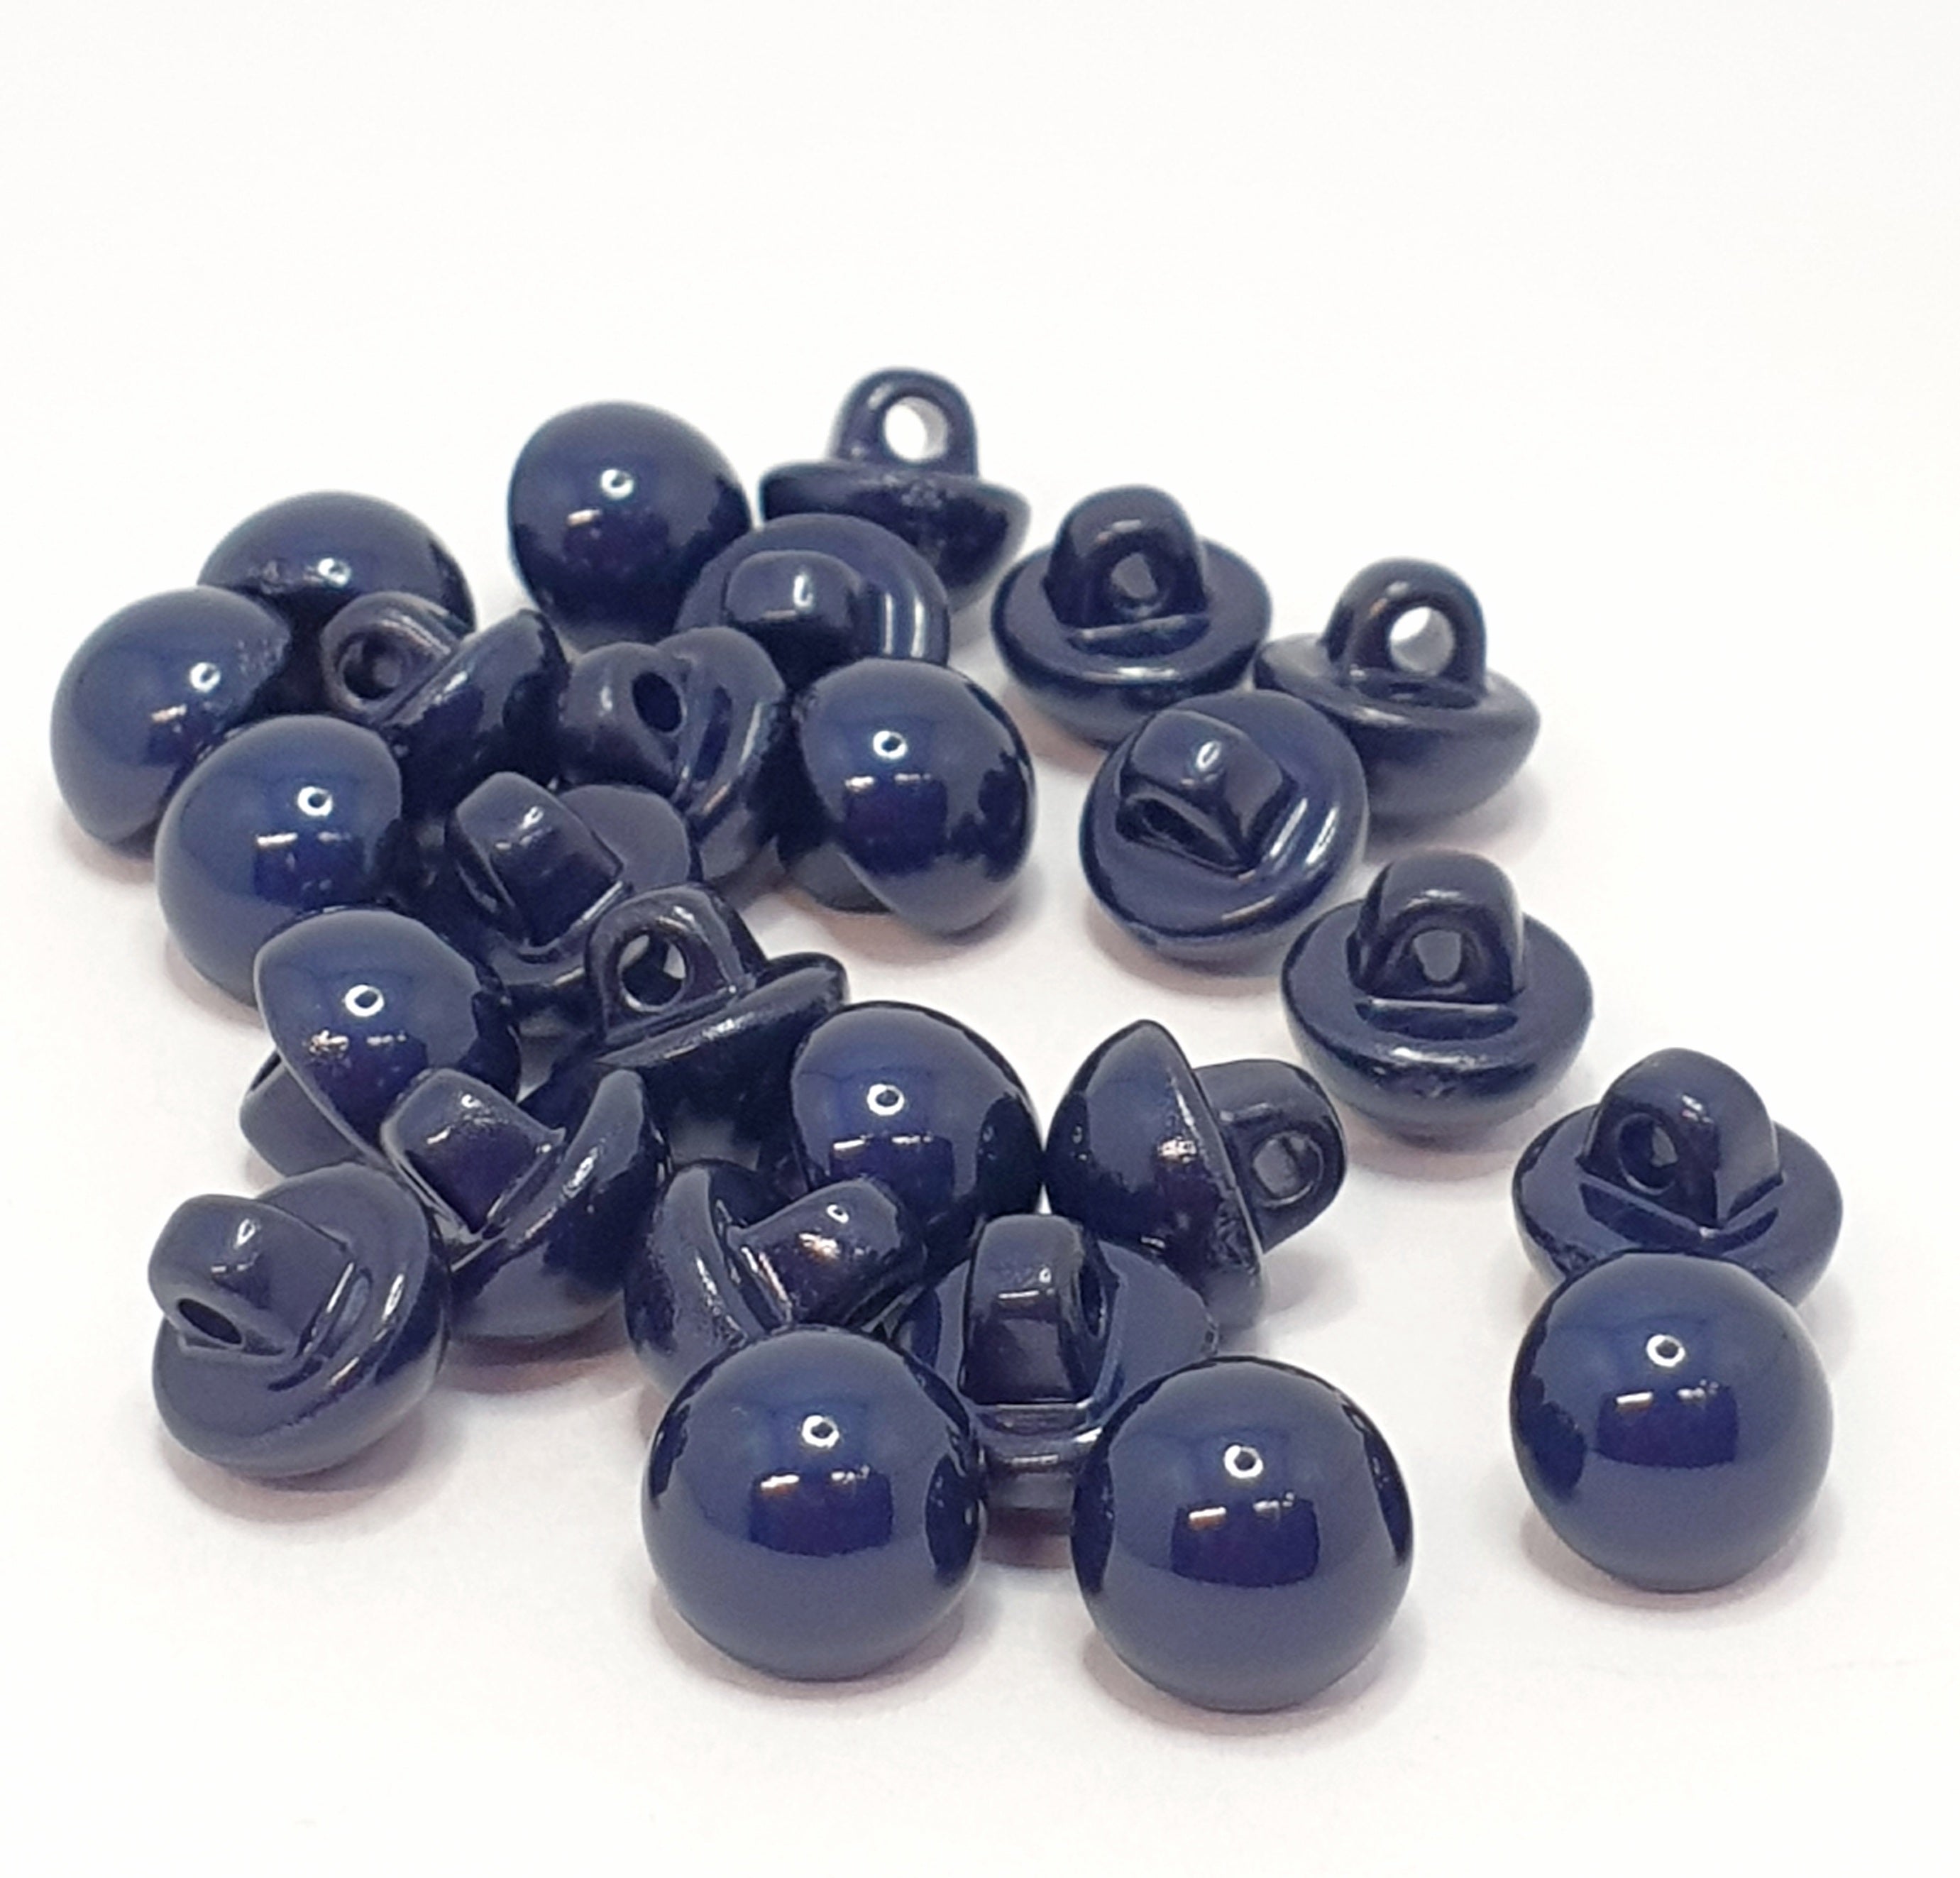 MajorCrafts 30pcs 8mm Navy Blue High-Grade Acrylic Small Round Sewing Mushroom Shank Buttons